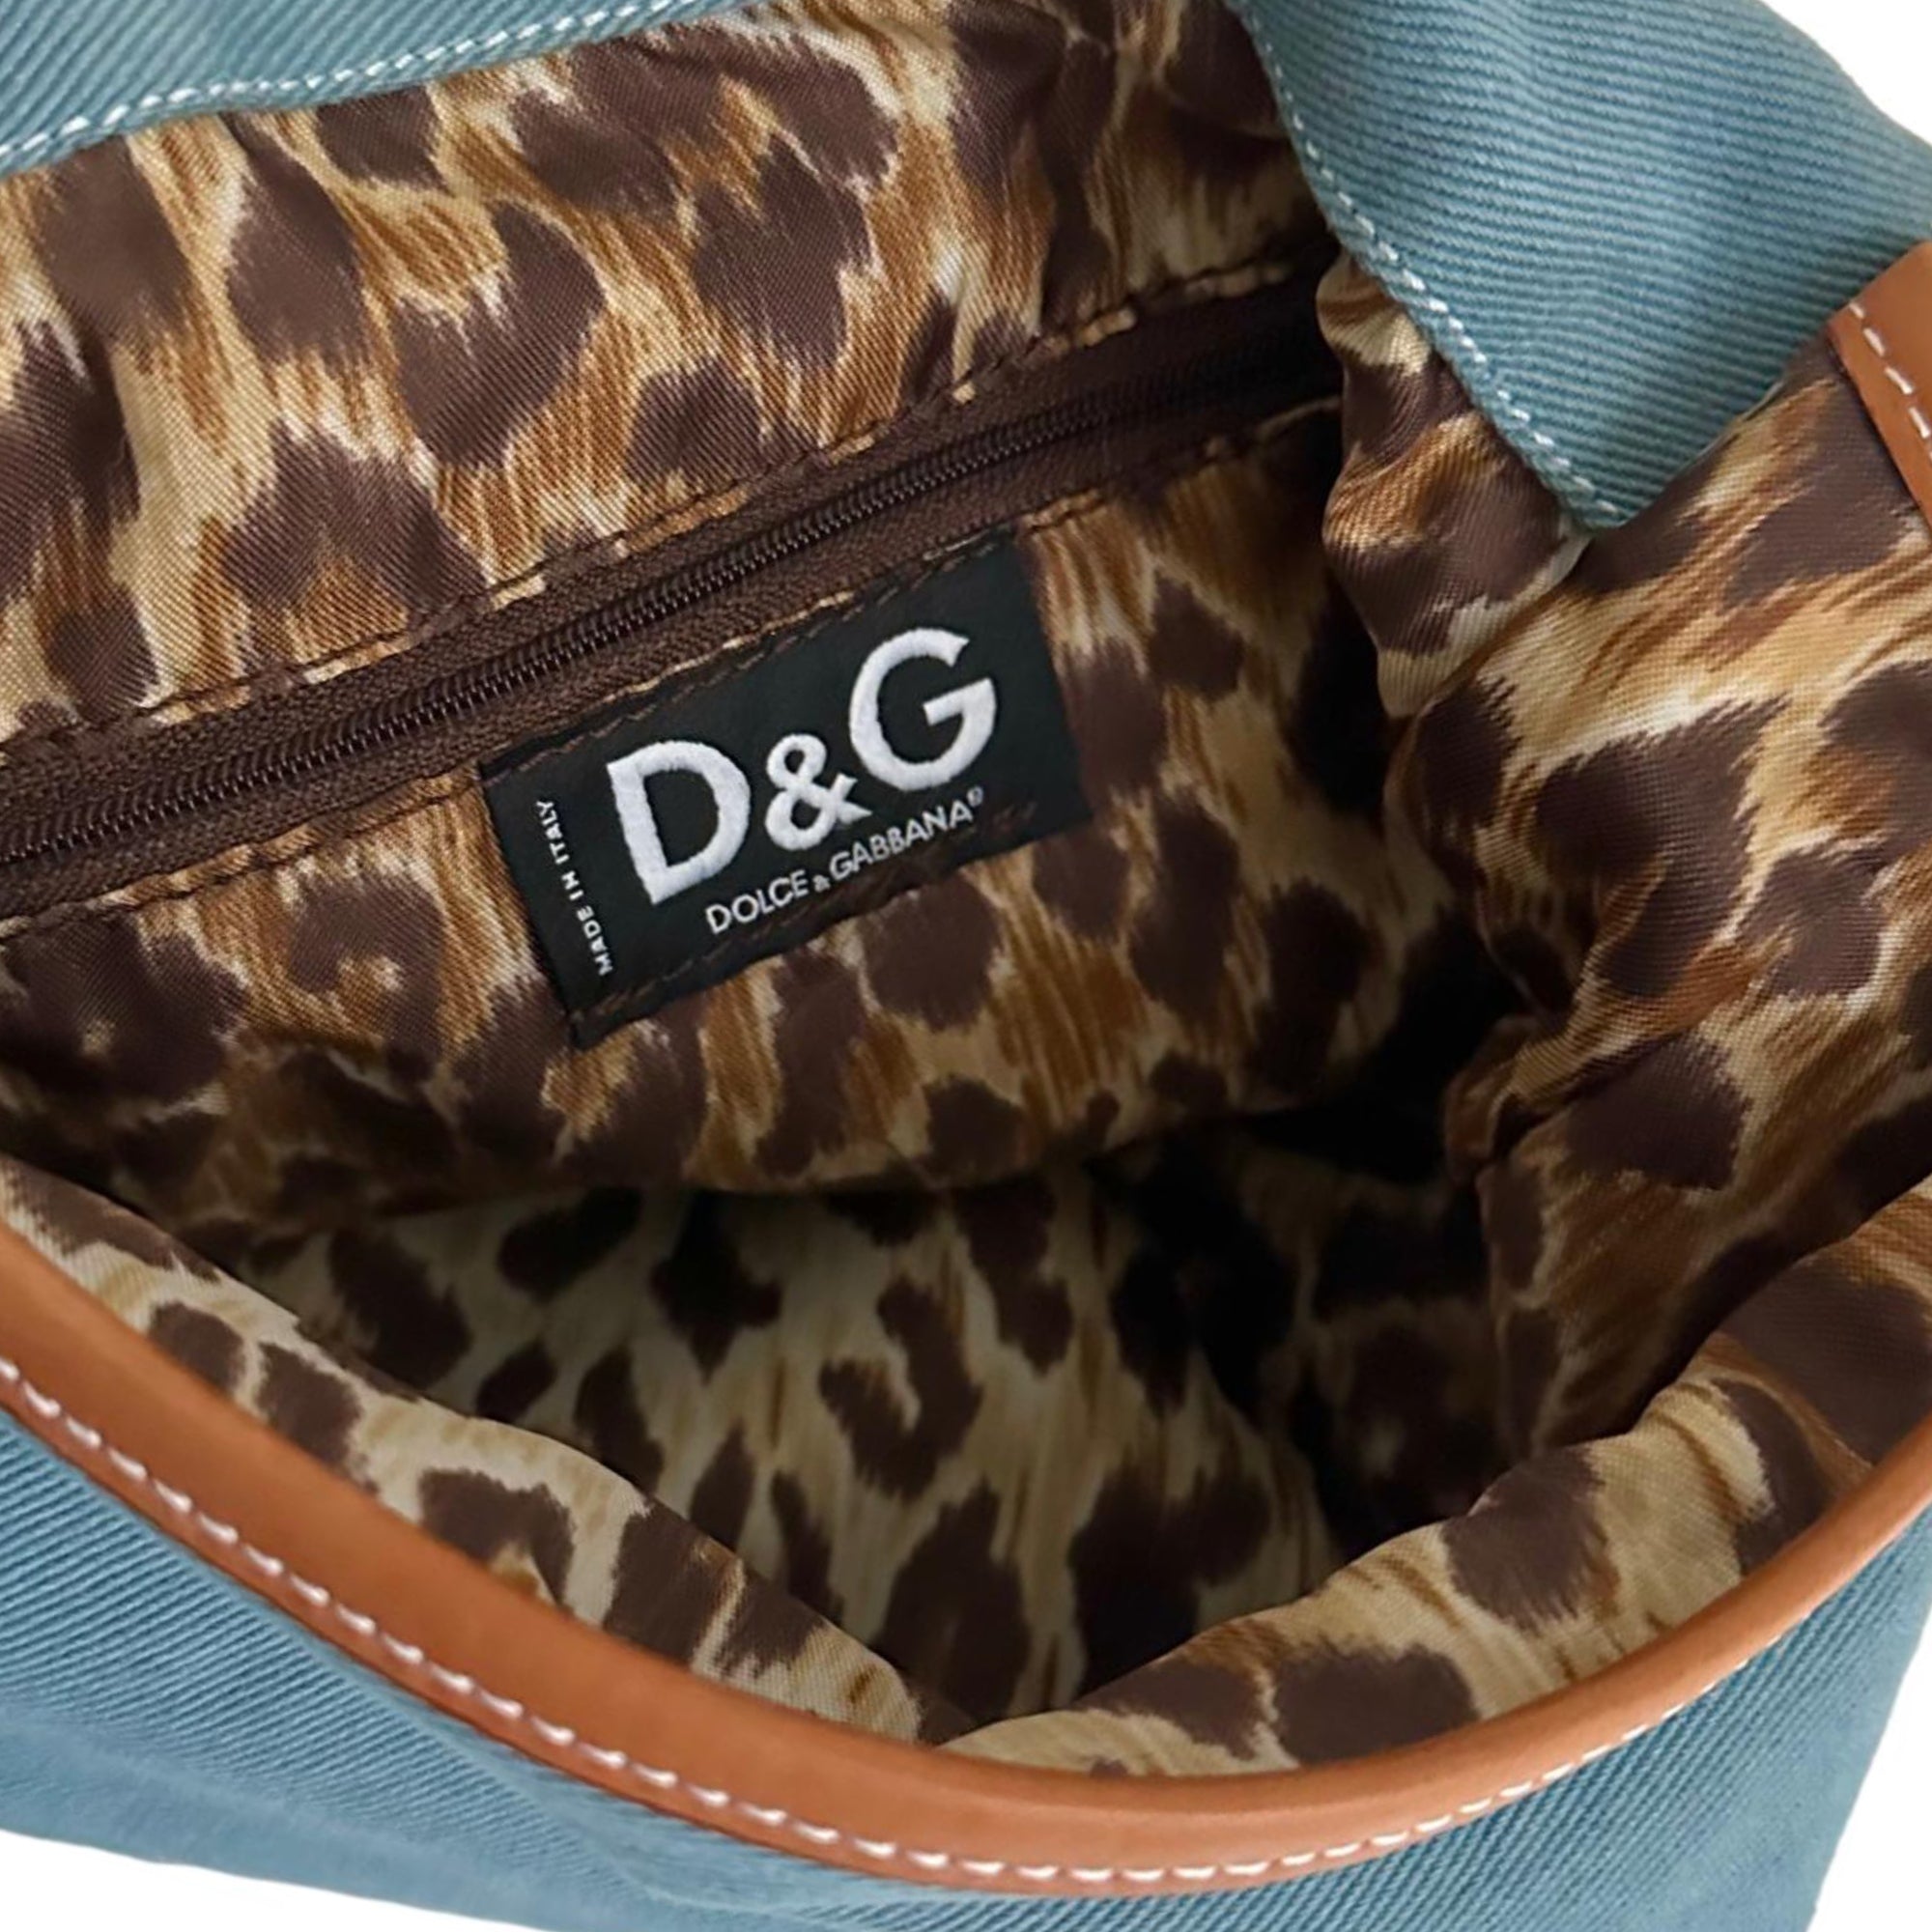 Dolce & Gabbana Denim Stuffed Animal Bag